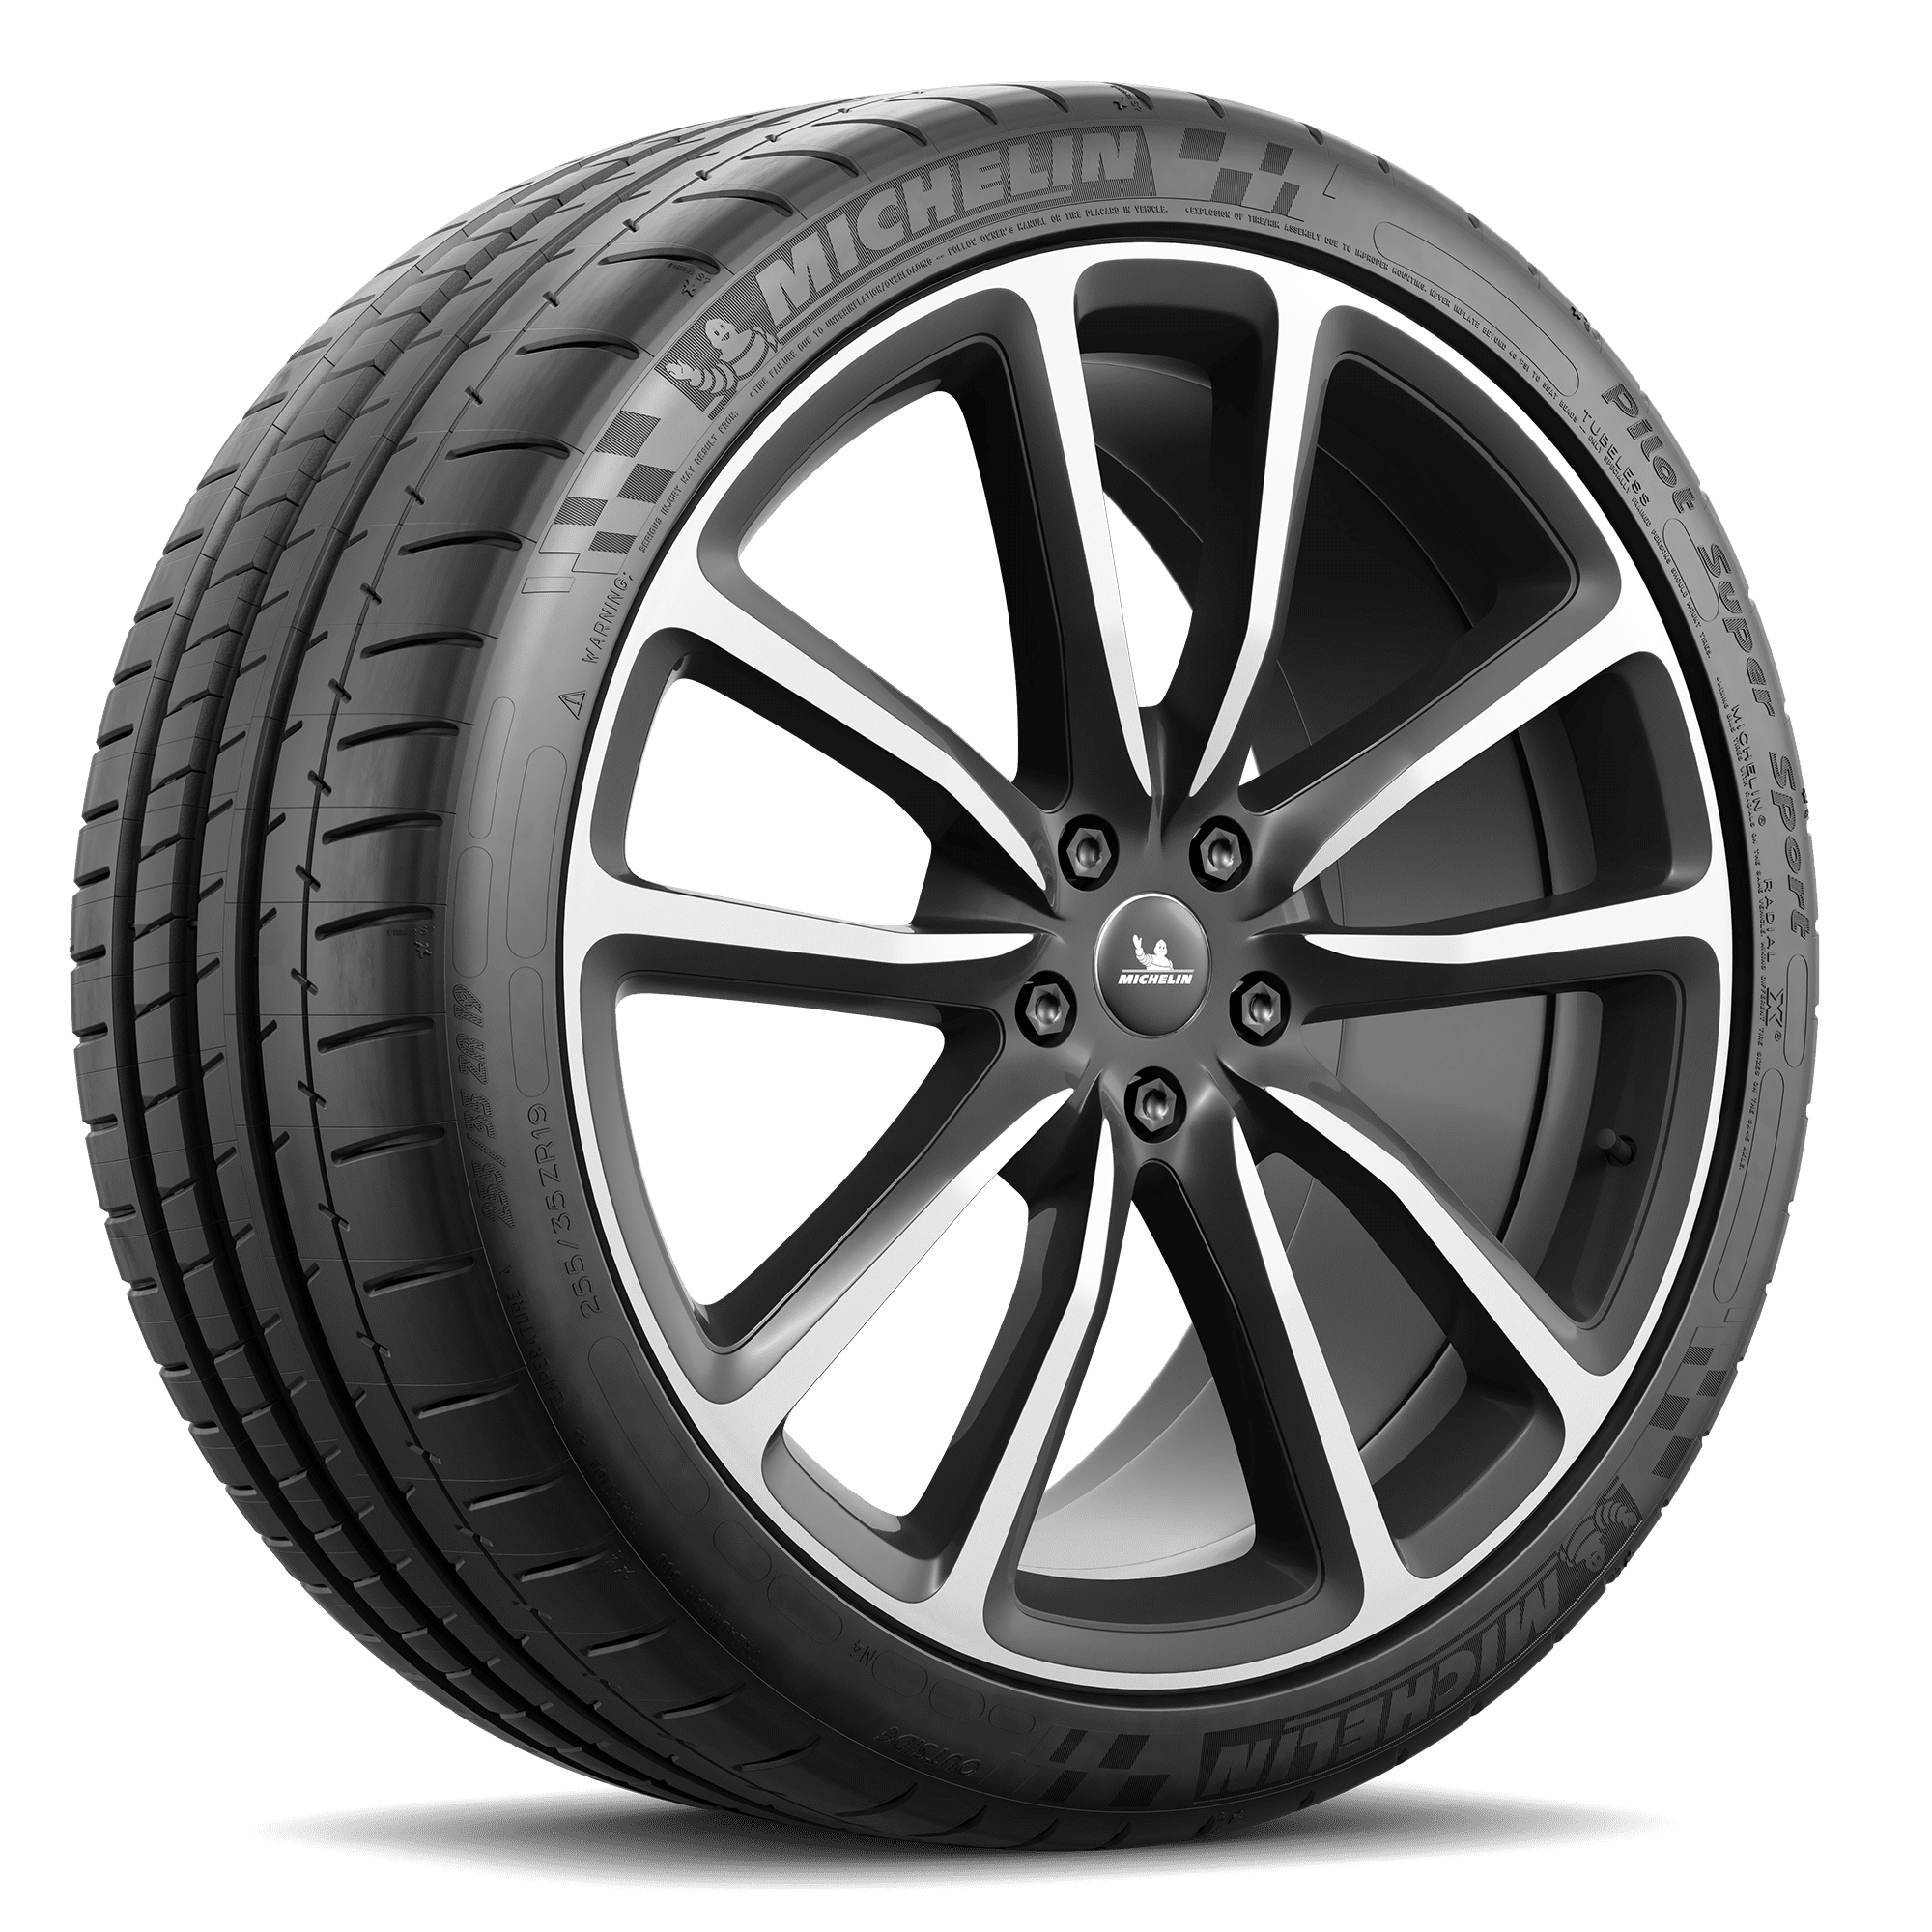 Michelin Pilot Super Sport Summer 255/40ZR18 (95Y) Tire